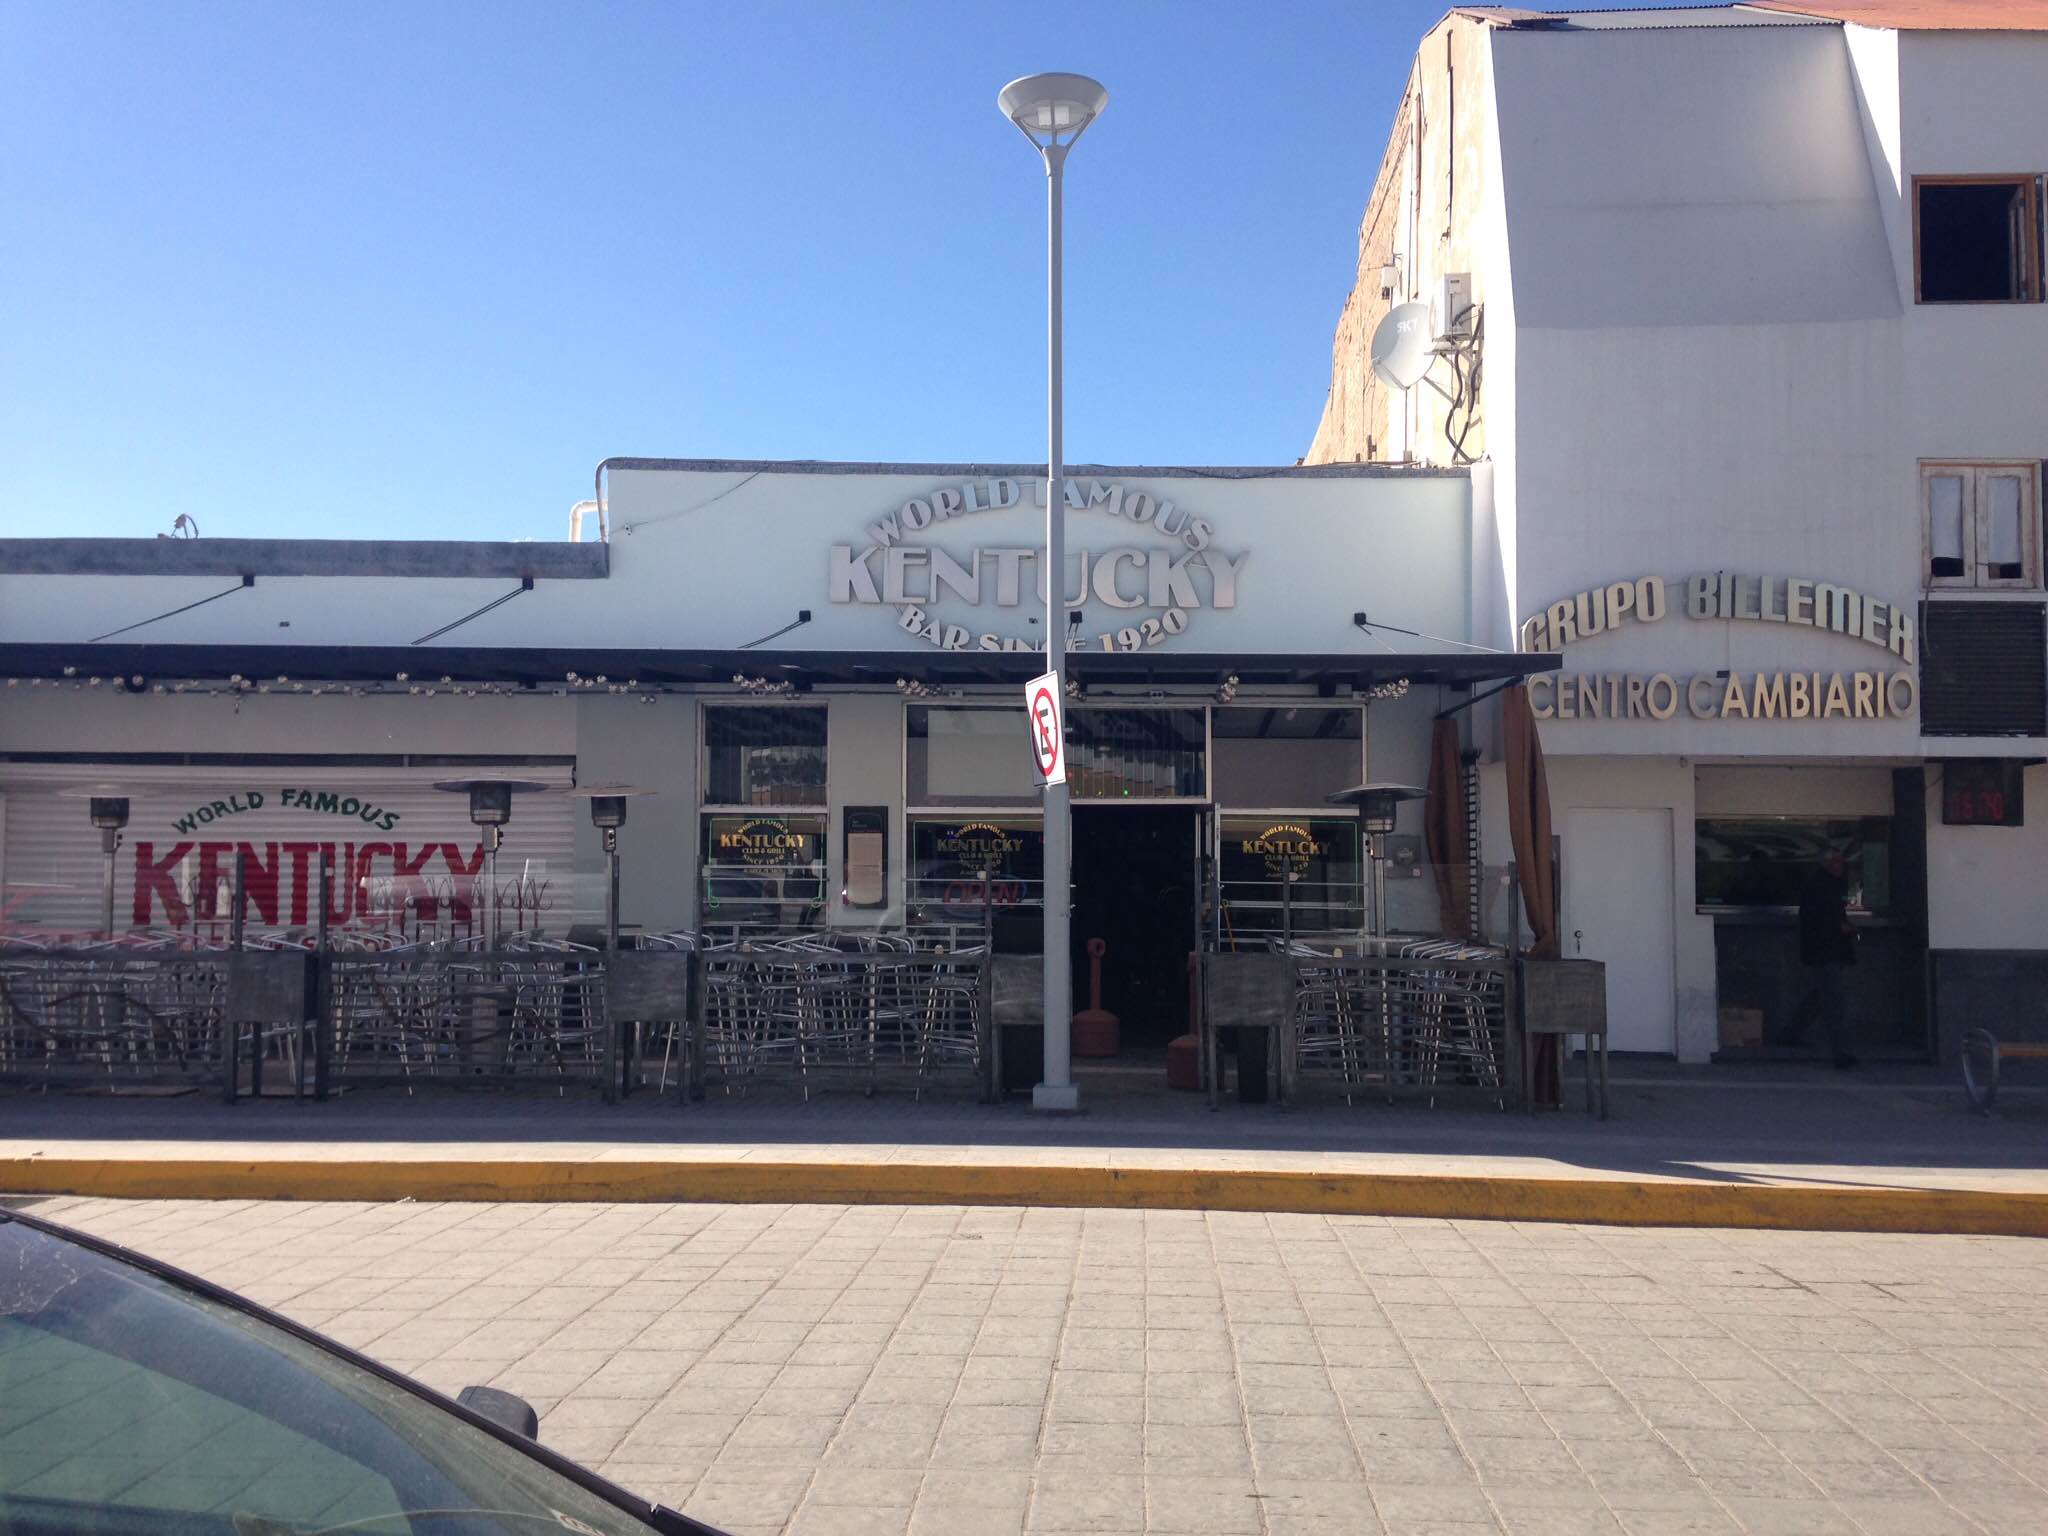 The World Famous Kentucky Club, Juarez, Mexico